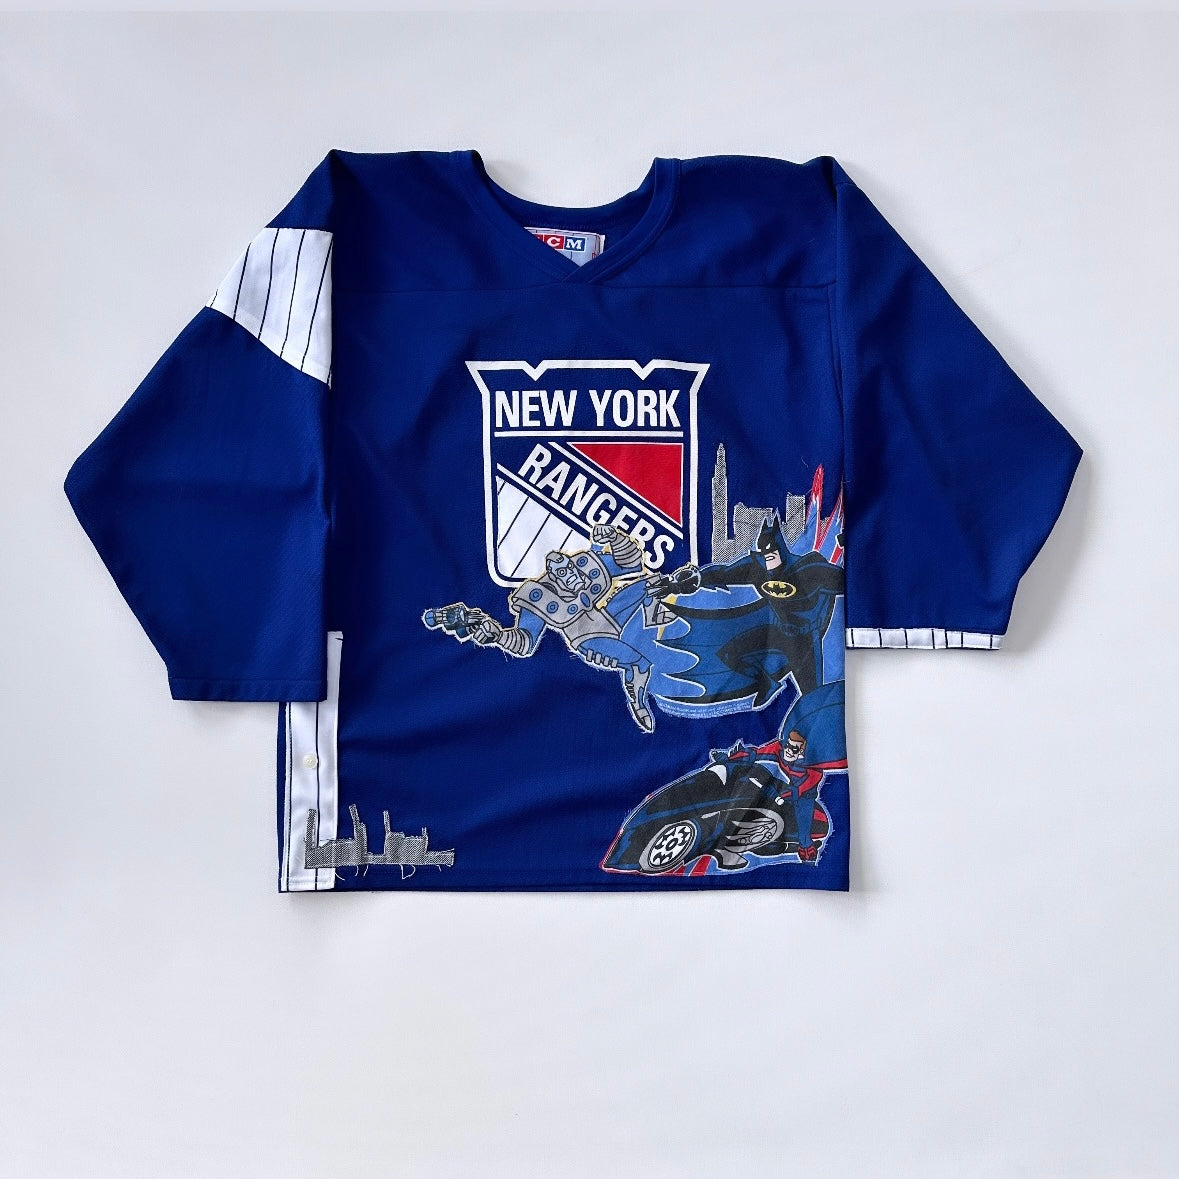 1 of 1 Vintage Reworked Patchwork Gretzky CCM Hockey Jersey